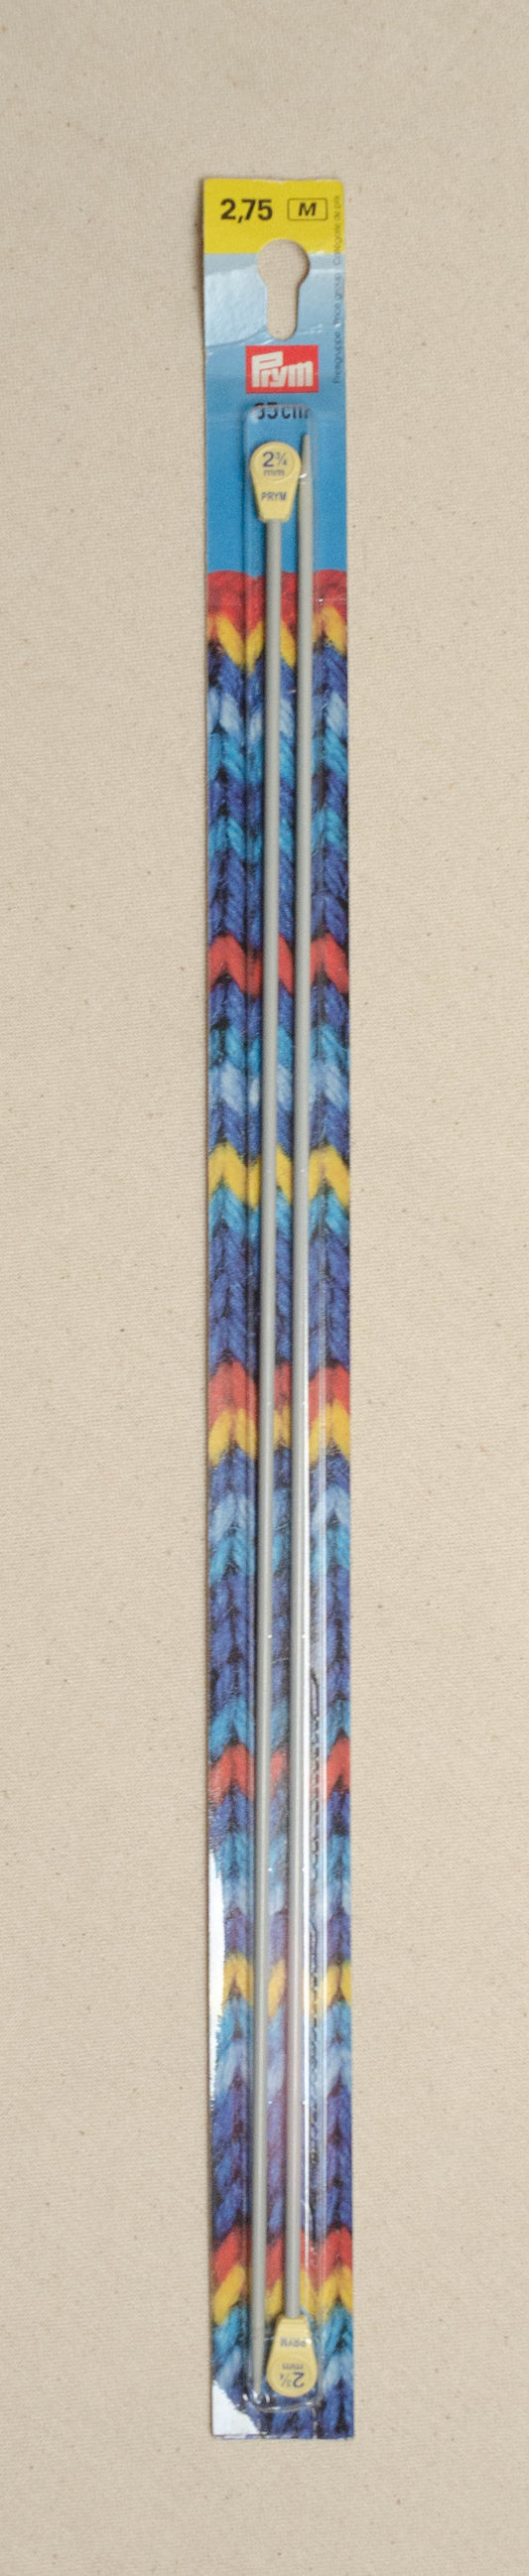 Prym 35cm Knitting Needles - 35cm X 2.75mm